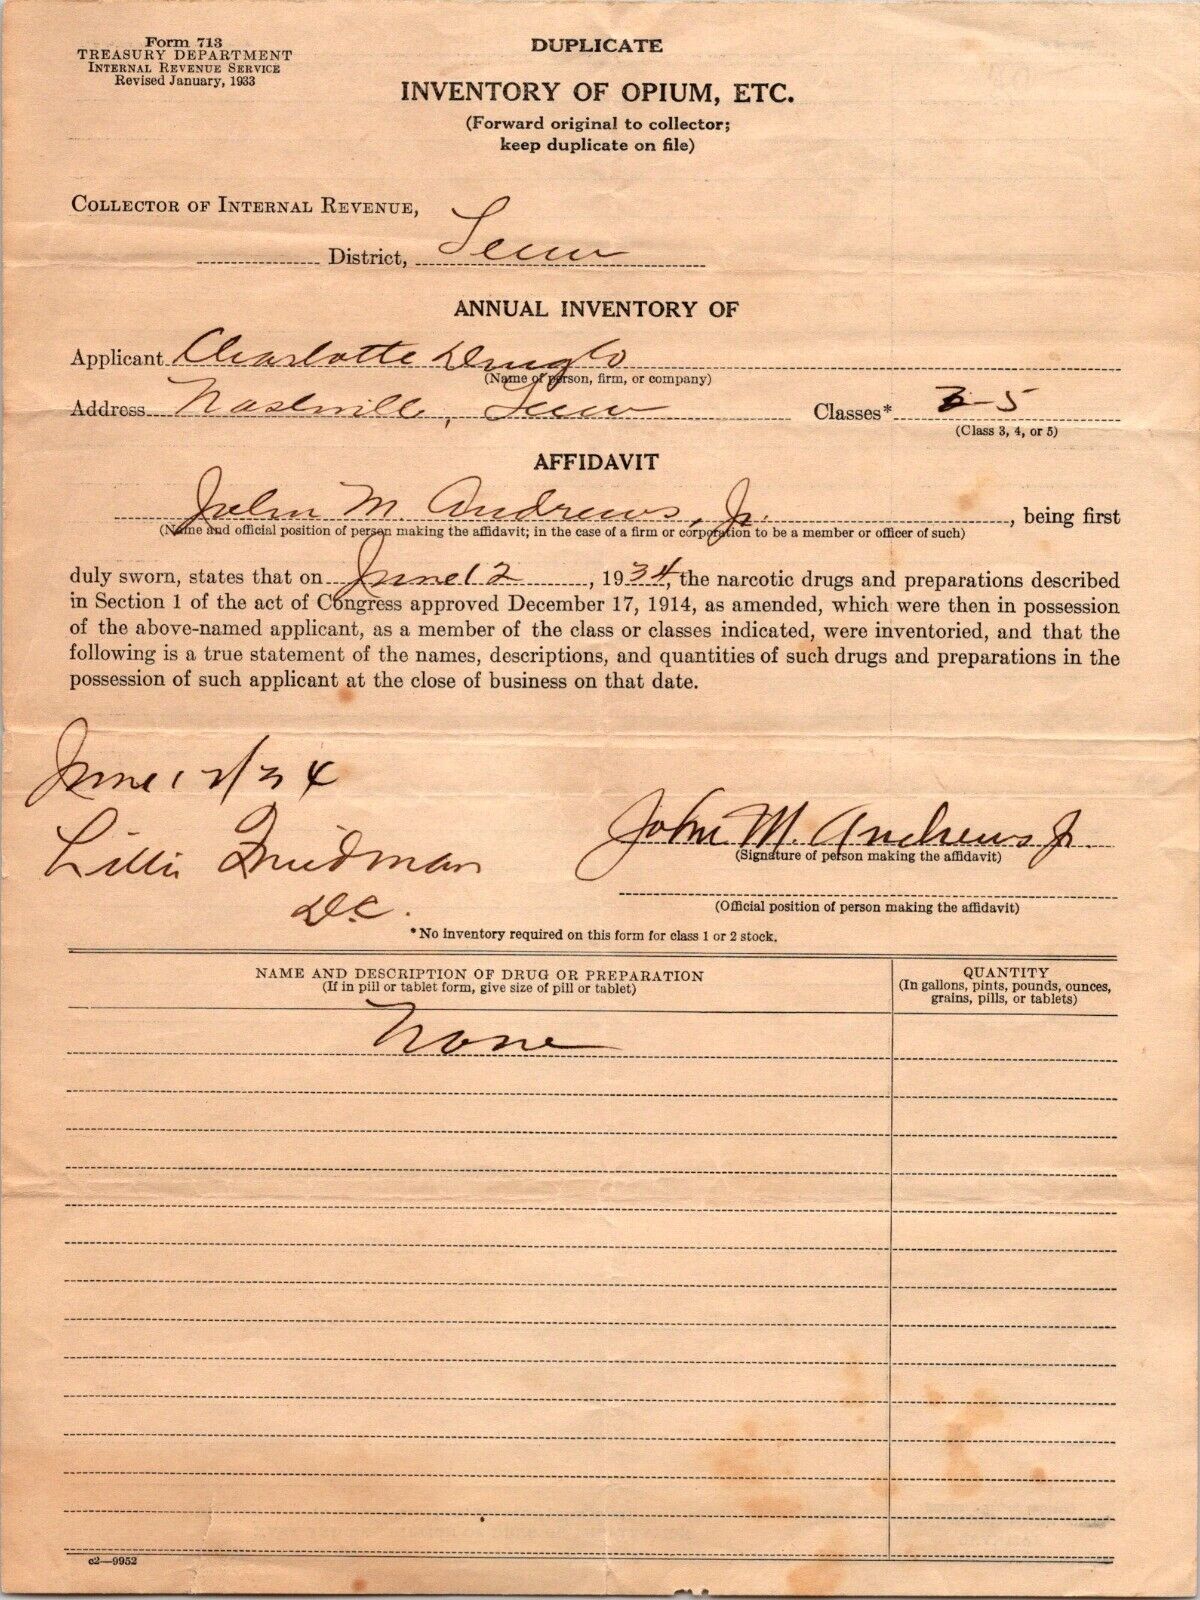 1934 INVENTORY OF OPIUM Charlotte Drug Co NASHVILLE Treasury Dept IRS Form 713